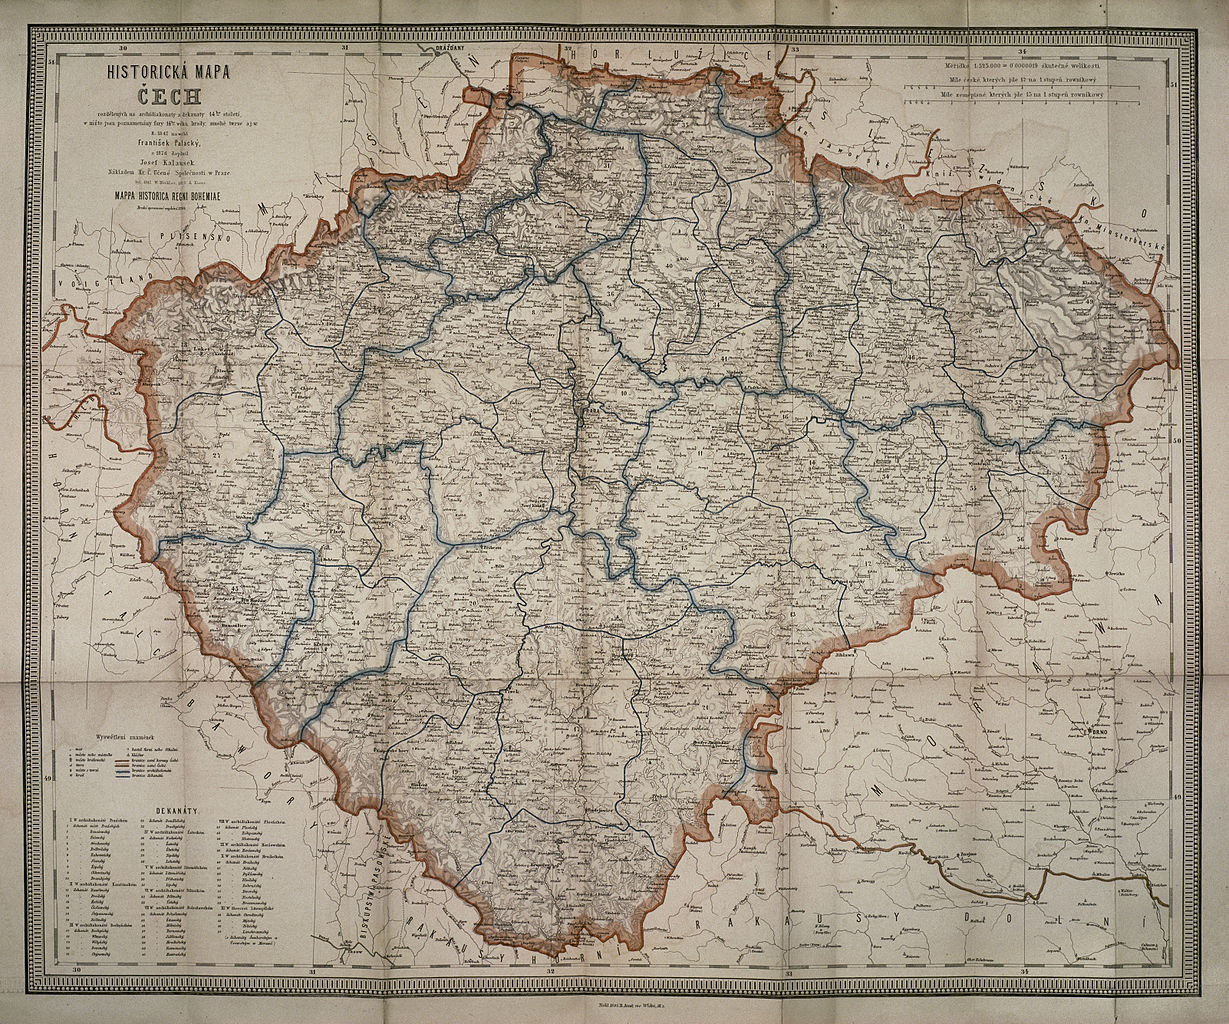 File:Historicka mapa Cech 14 stol.jpg - Wikimedia Commons